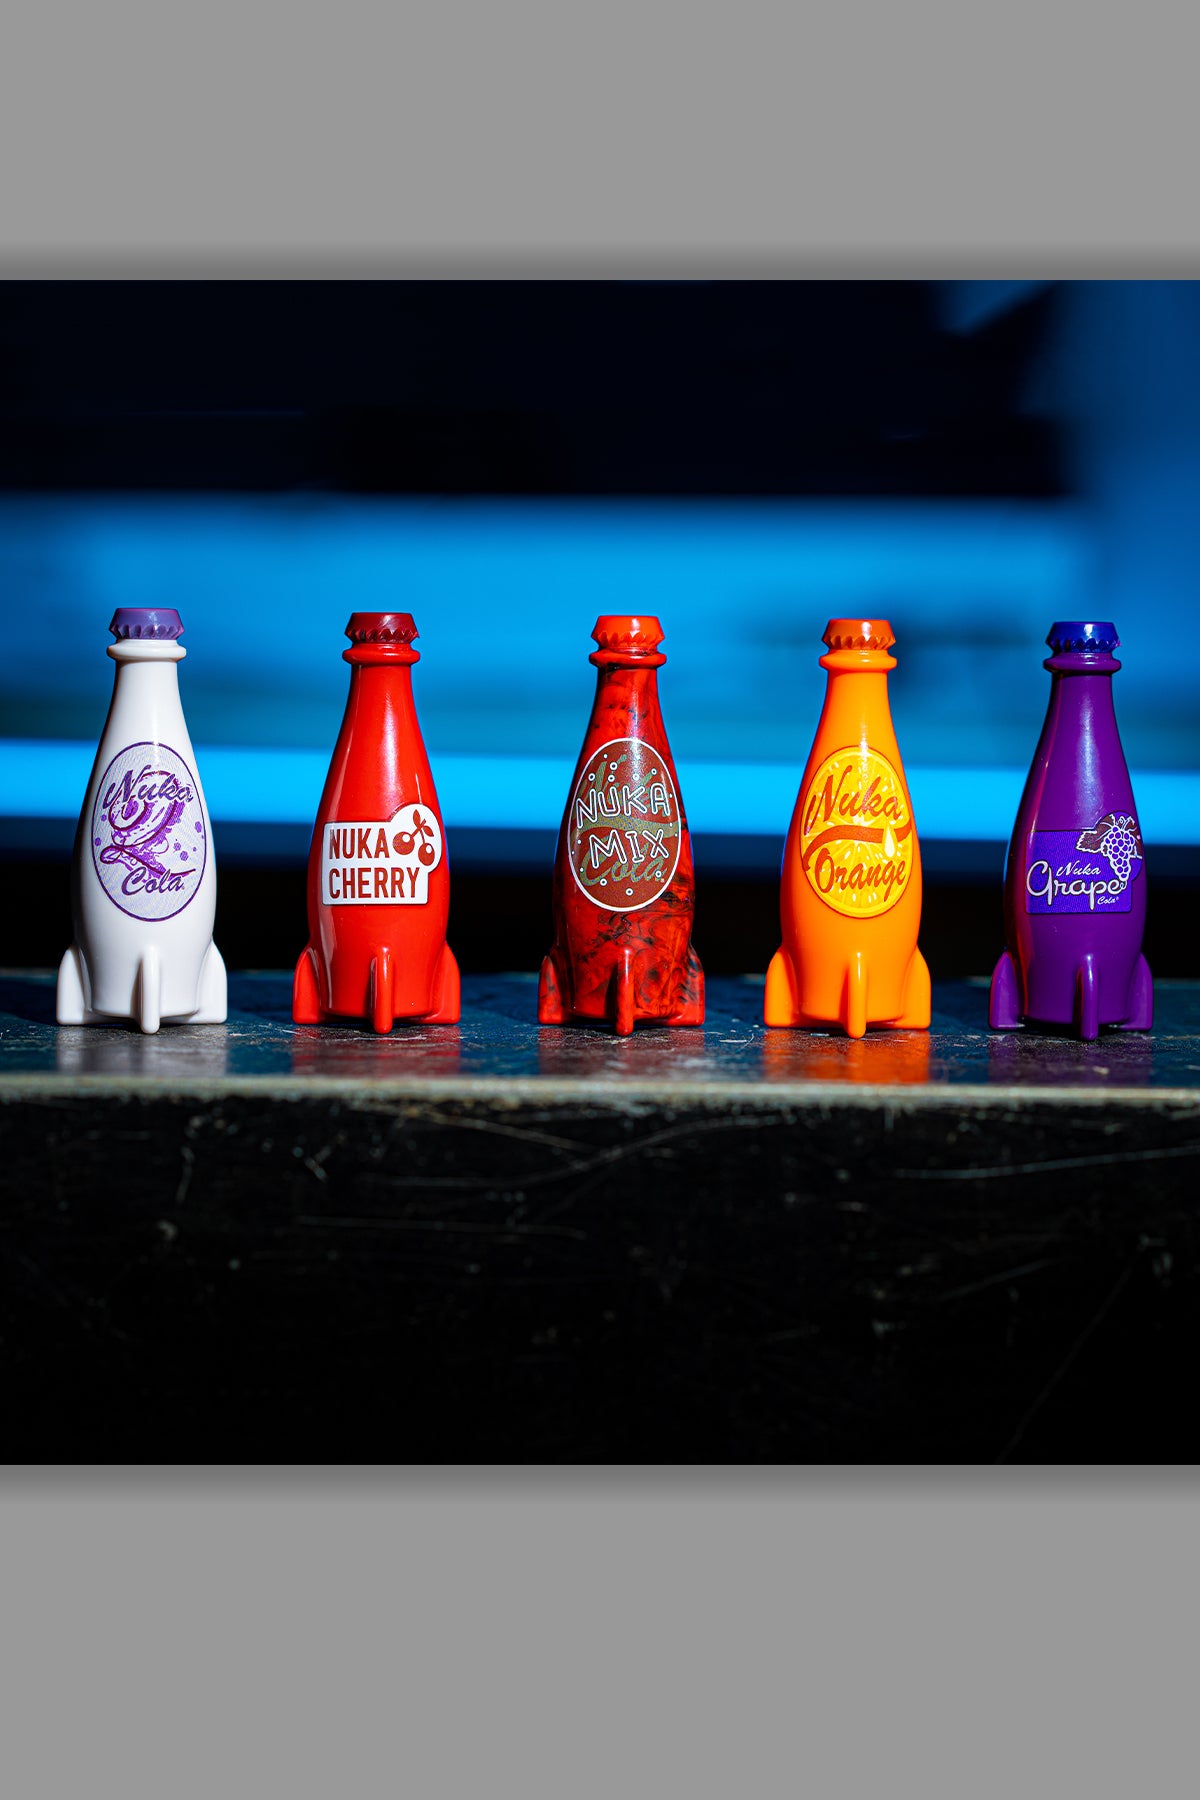 Nuka Cola Mini Bottle Series 2 Collector's Bundle